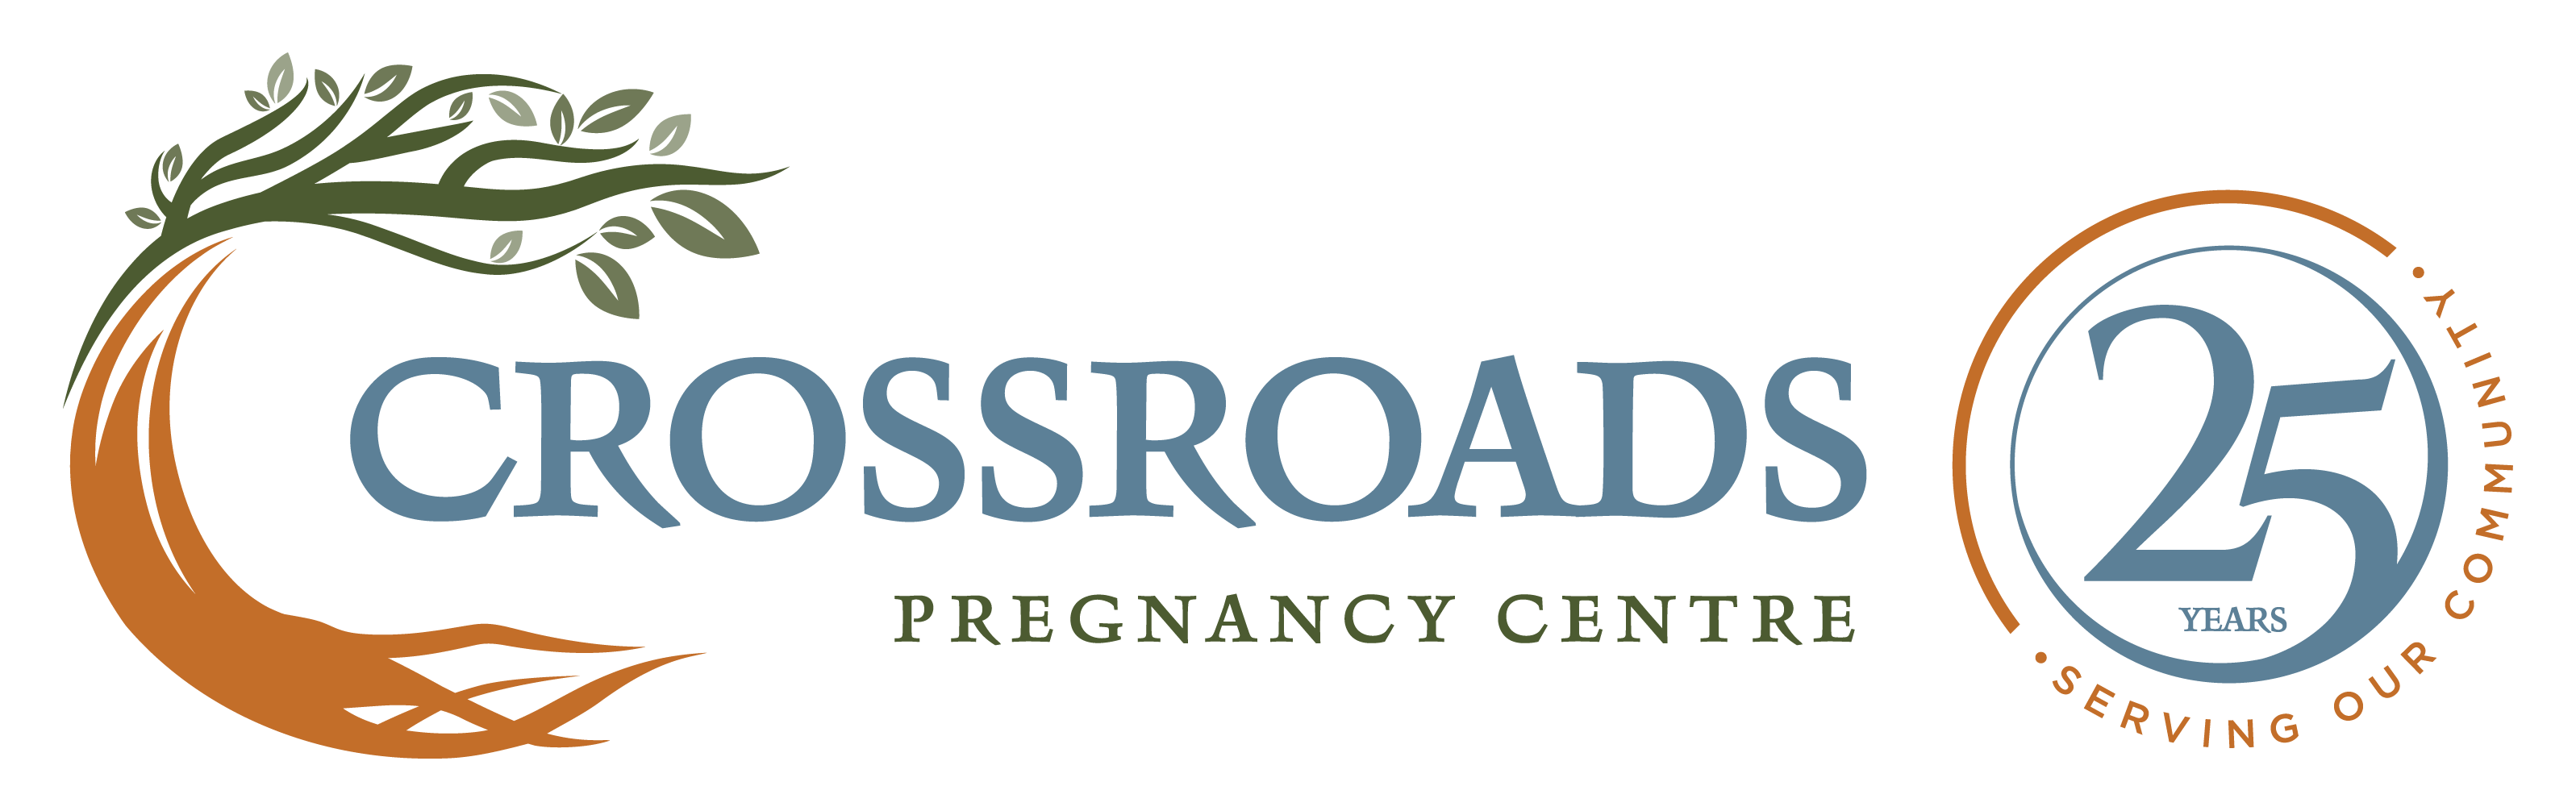 Crossroads Crisis Pregnancy Centre logo